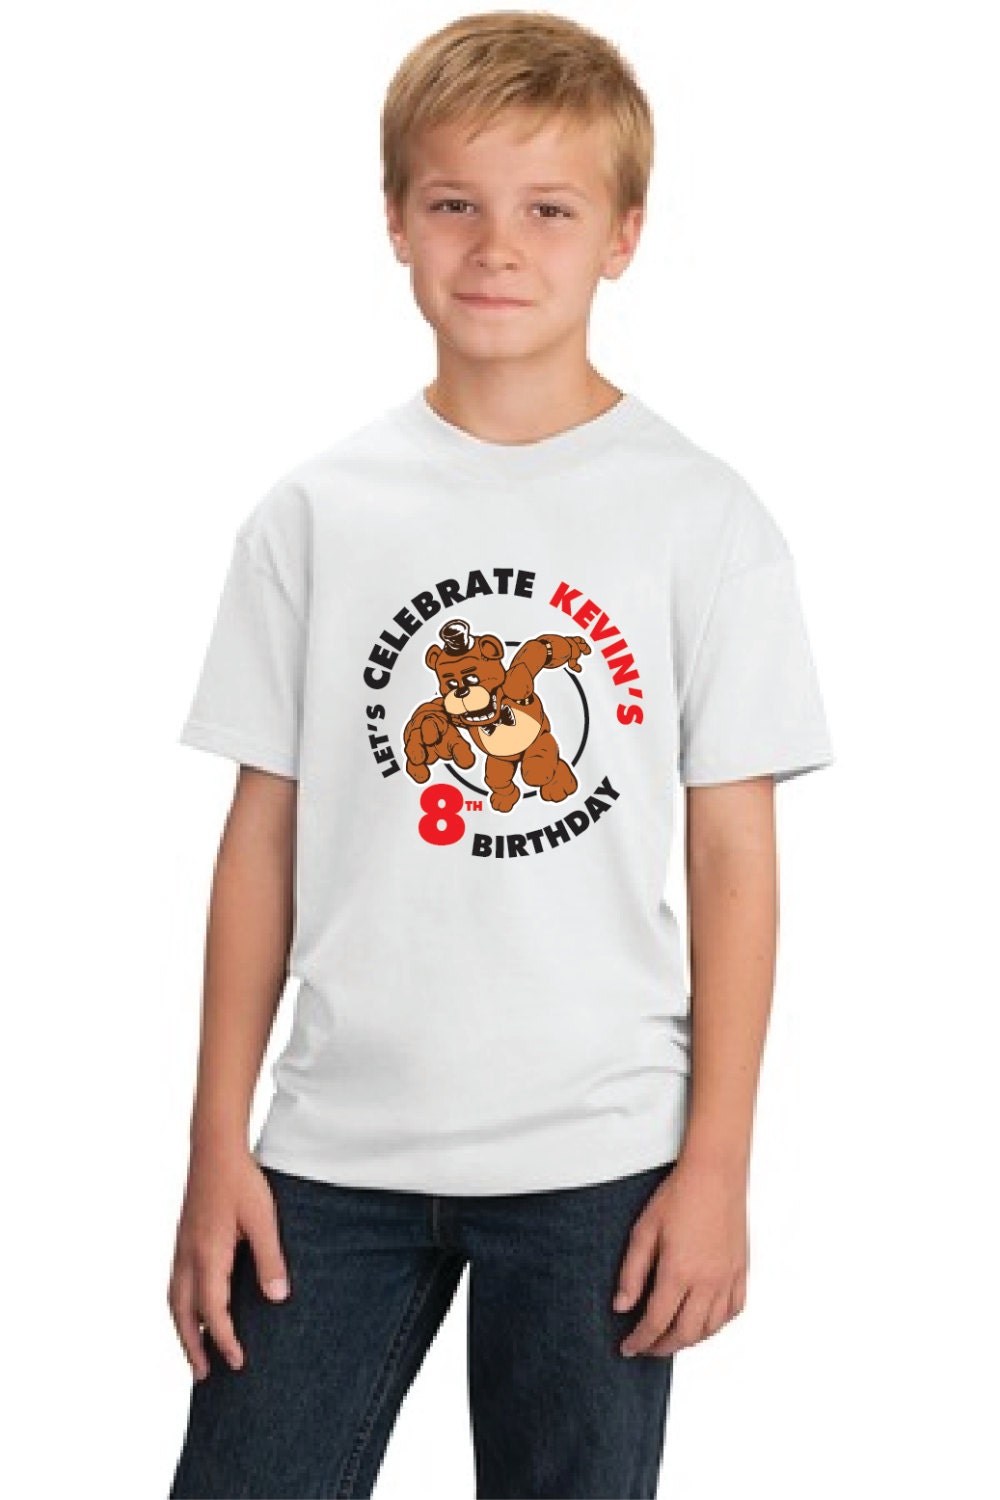 Five Nights at Freddy's custom t-shirts